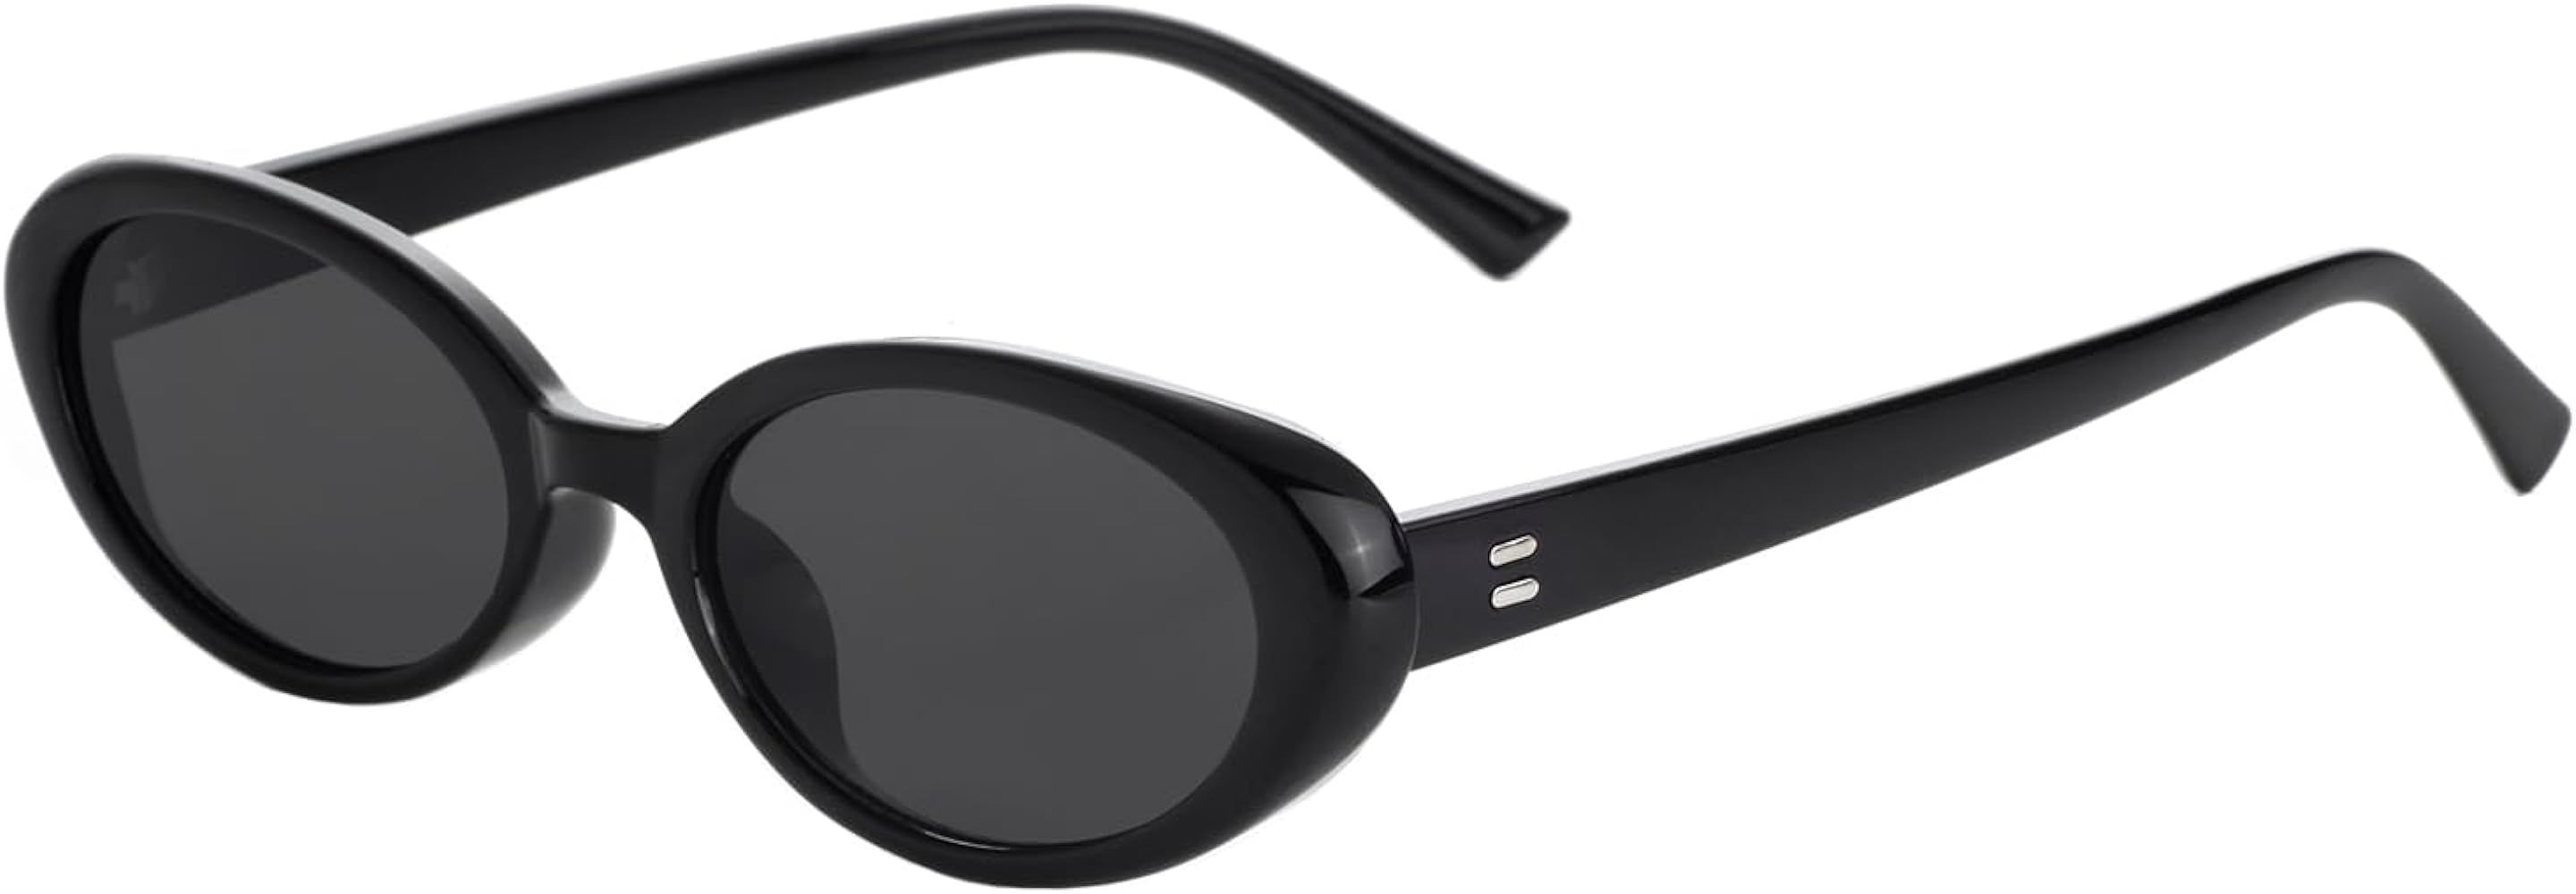 Retro Oval Sunglasses for Women Men 90s Style Vintage Small Sun Glasses UV400 Protection Shades | Amazon (US)